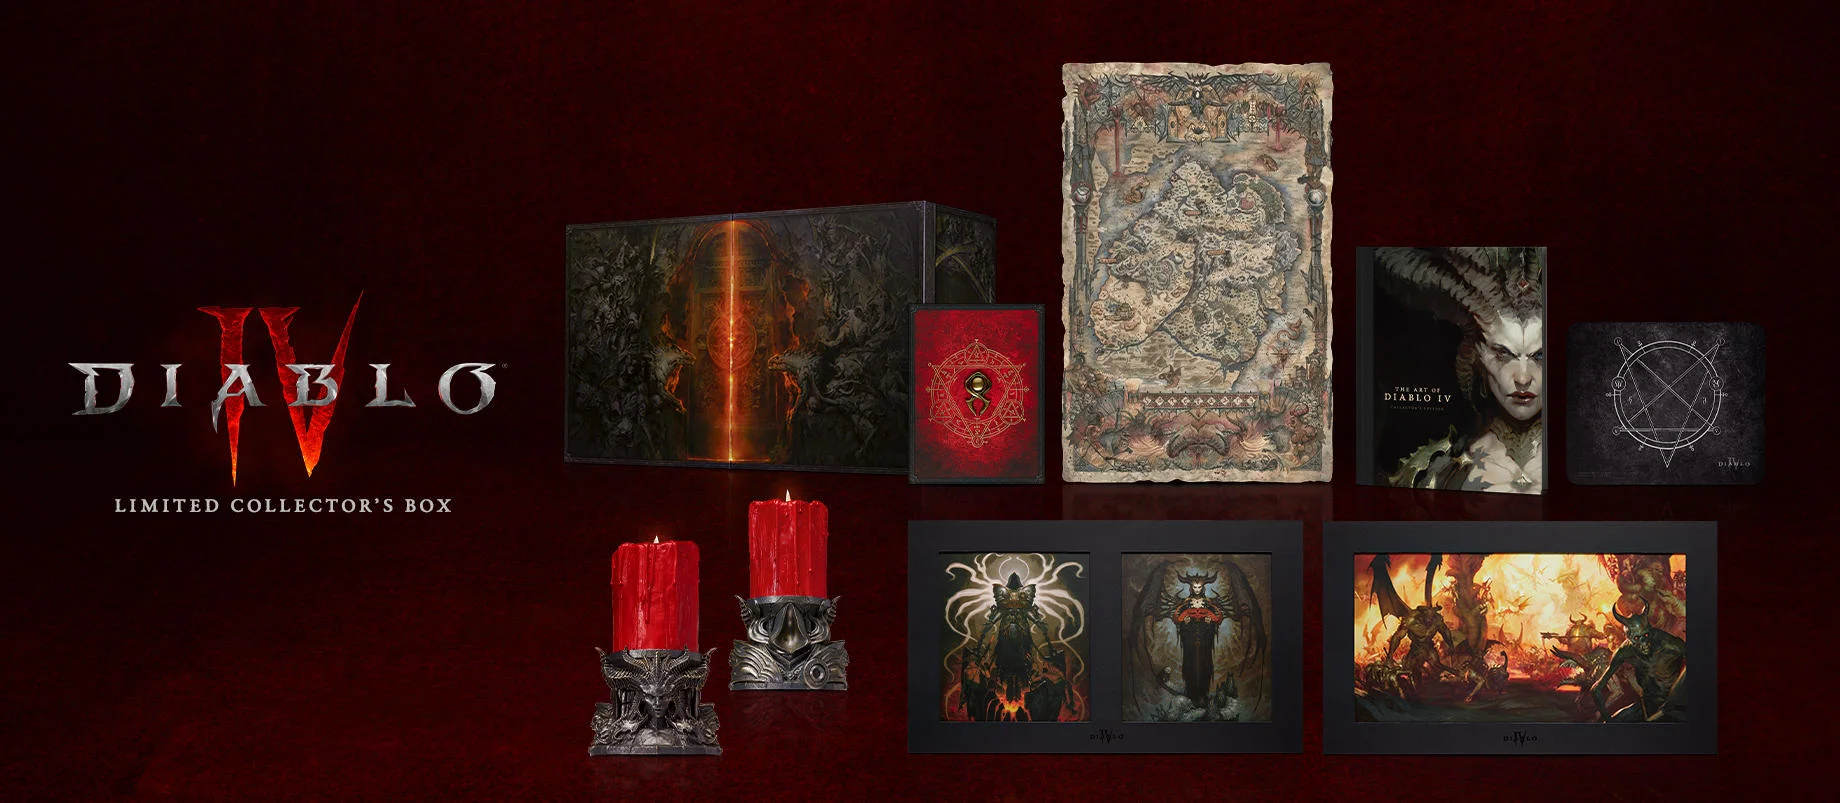 diablo iv limited collectors box 1 | Diablo 4 | Diablo 4 Limited Collector’s Box เปิดให้ส่งซื้อล่วงหน้าแล้วในราคา $96.66 ไม่มีเกมหลัก